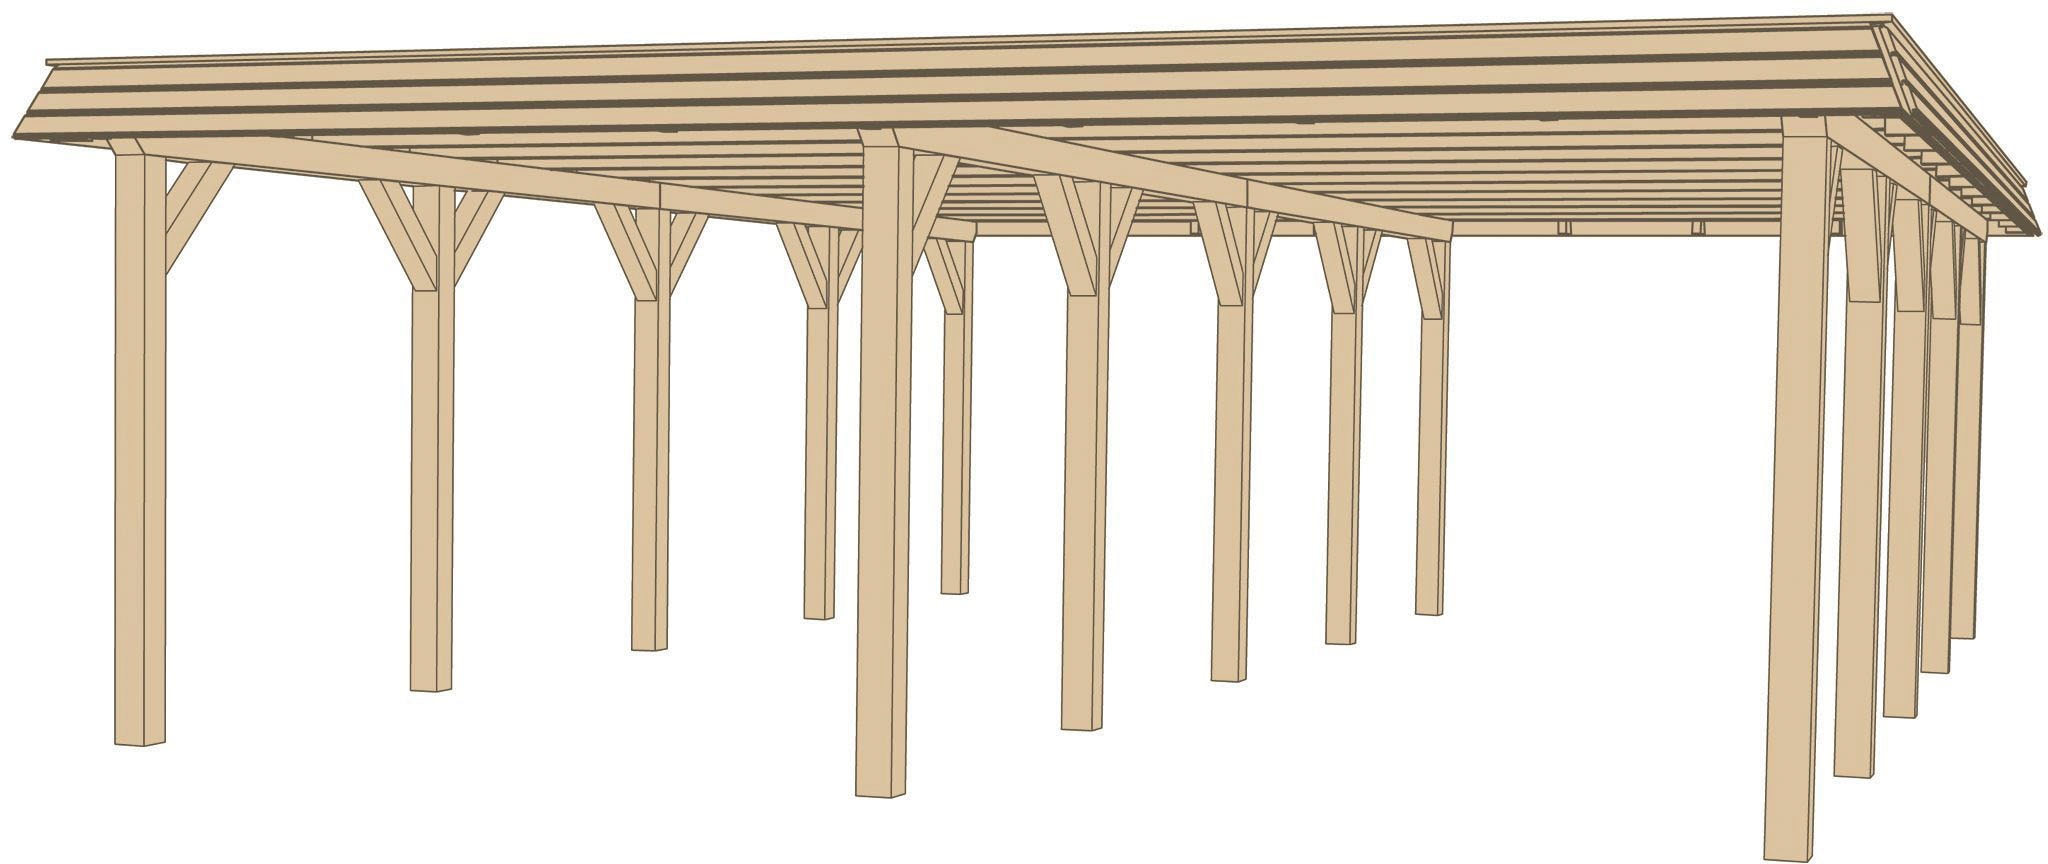 weka Doppelcarport »Leimholz-Flachdach-Carport 615 Gr.2«, Holz, 270 cm, naturbelassen, Flachdach aus verzinktem Stahl mit Trapezprofil